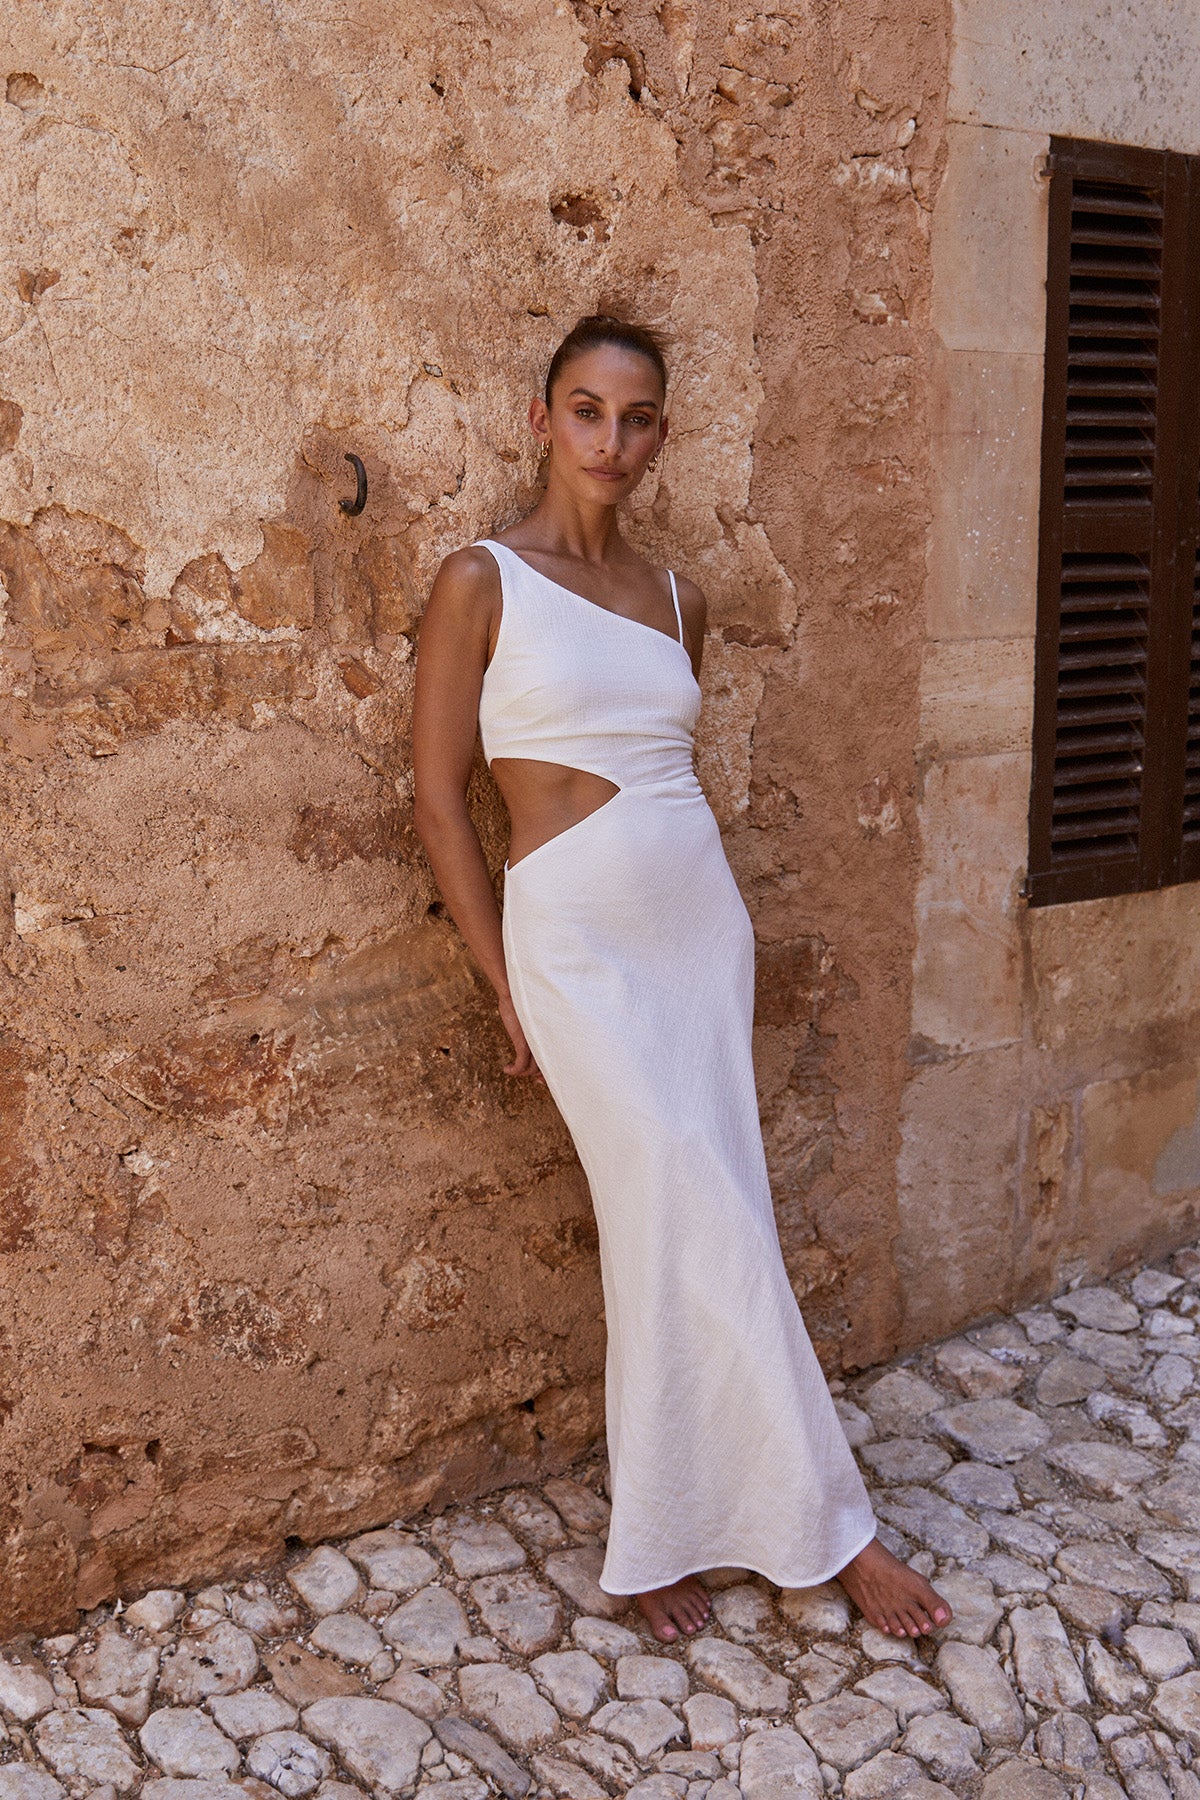 Perfect Stranger Dominique Elissa Golden Hour Textured Midi Dress White